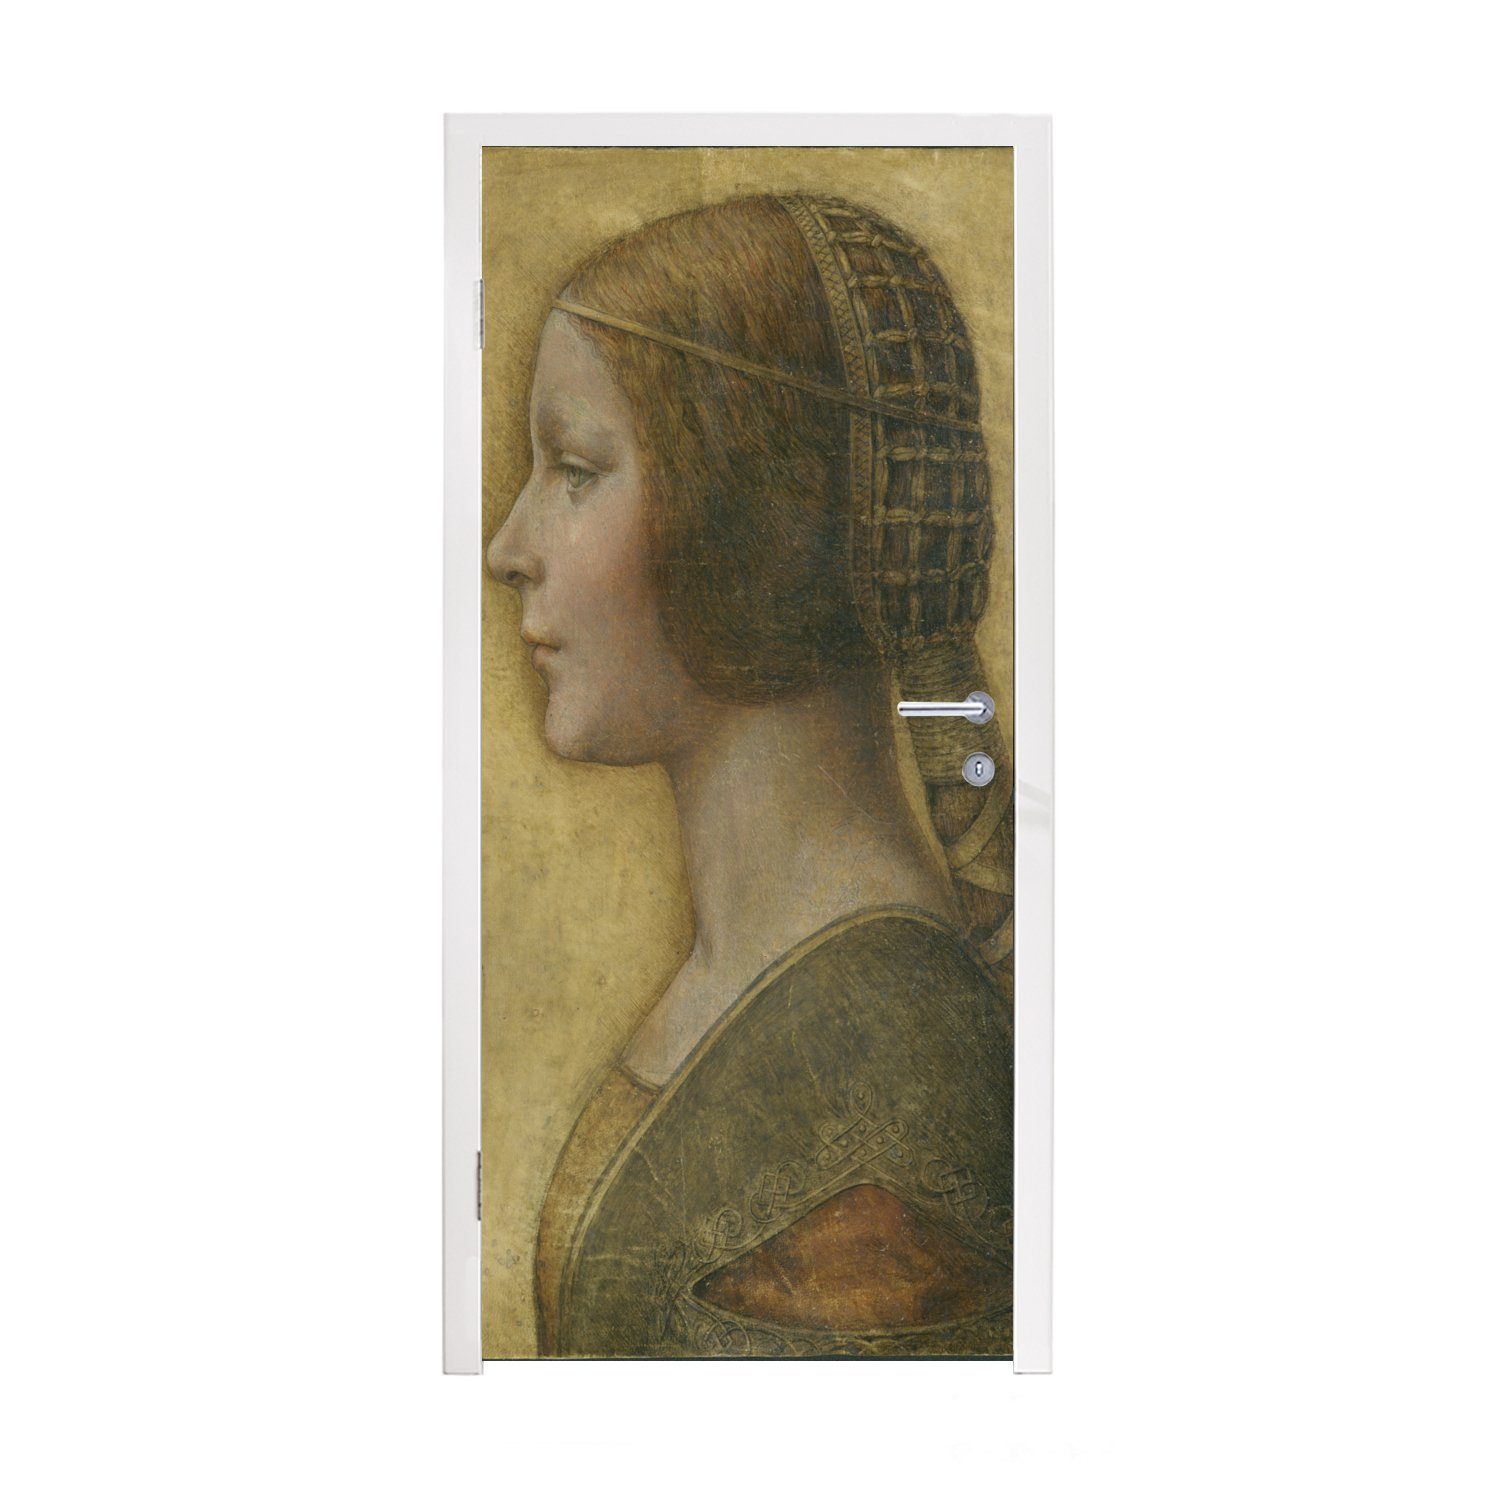 MuchoWow Türtapete La Bella Principessa - Leonardo da Vinci, Matt, bedruckt, (1 St), Fototapete für Tür, Türaufkleber, 75x205 cm